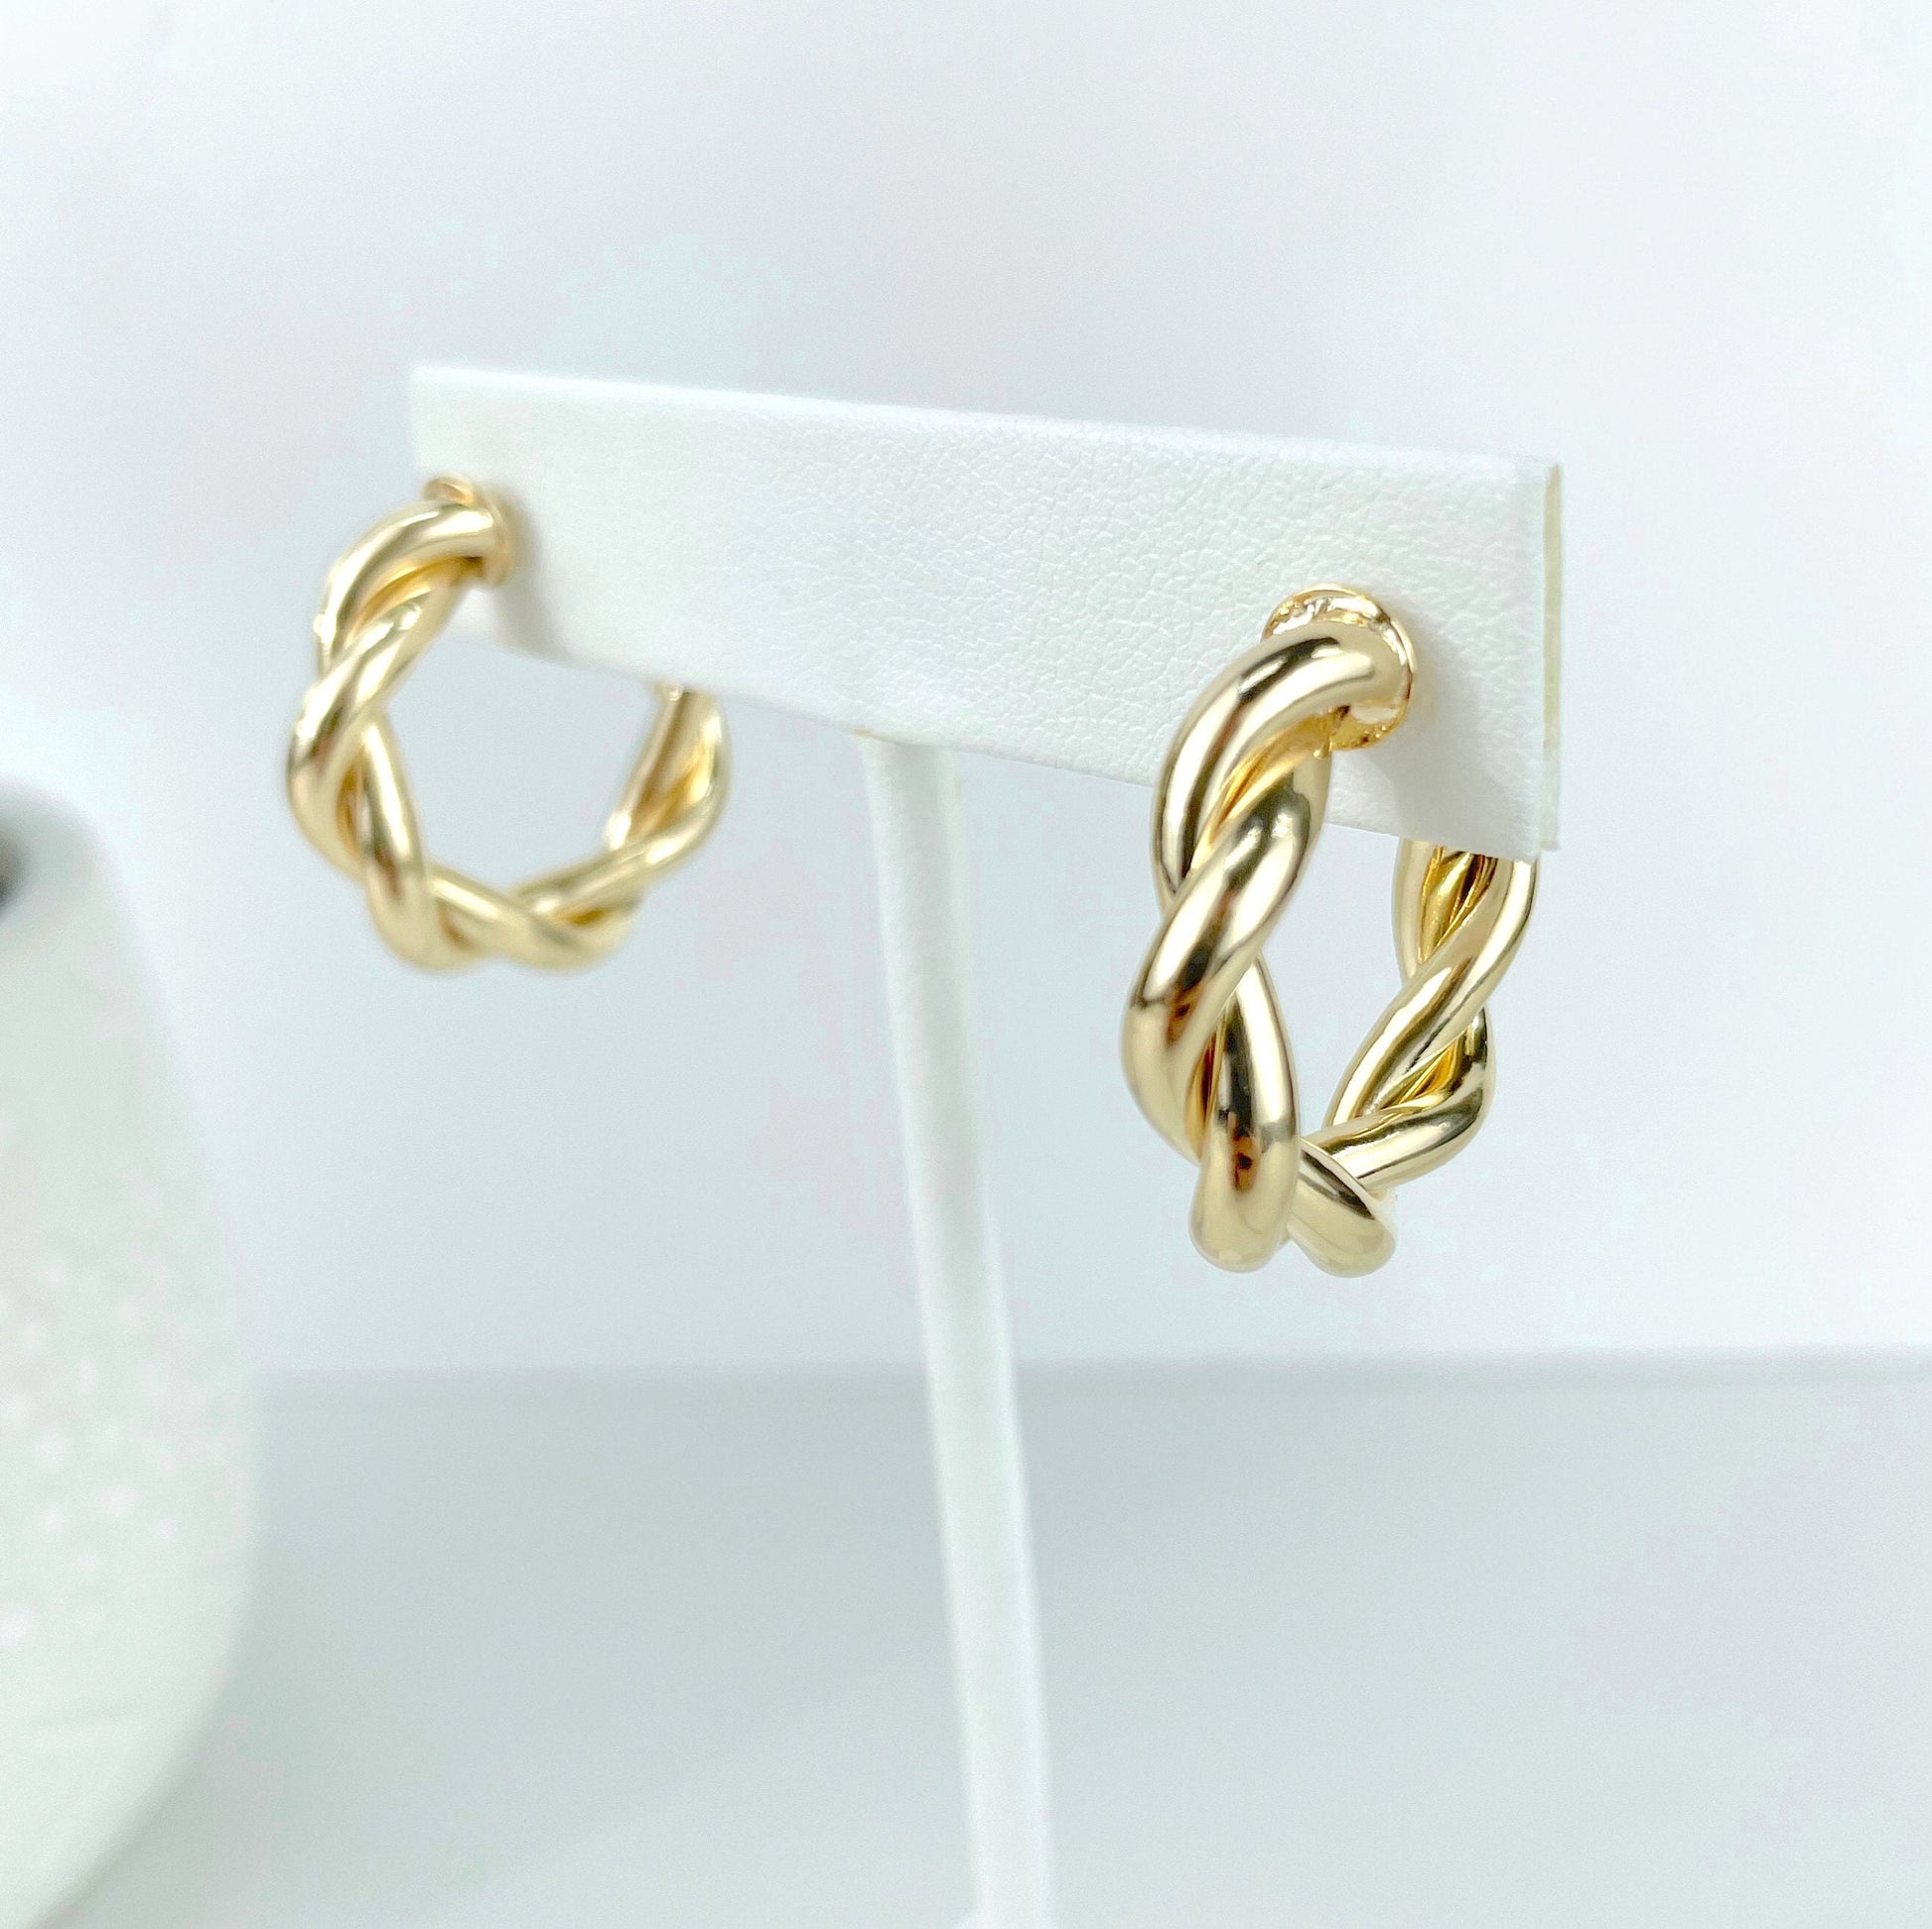 18k Gold Filled 25mm Twisted Hoop Earrings, C-Hoop, Push Back Closure, Wholesale Jewelry Supplies